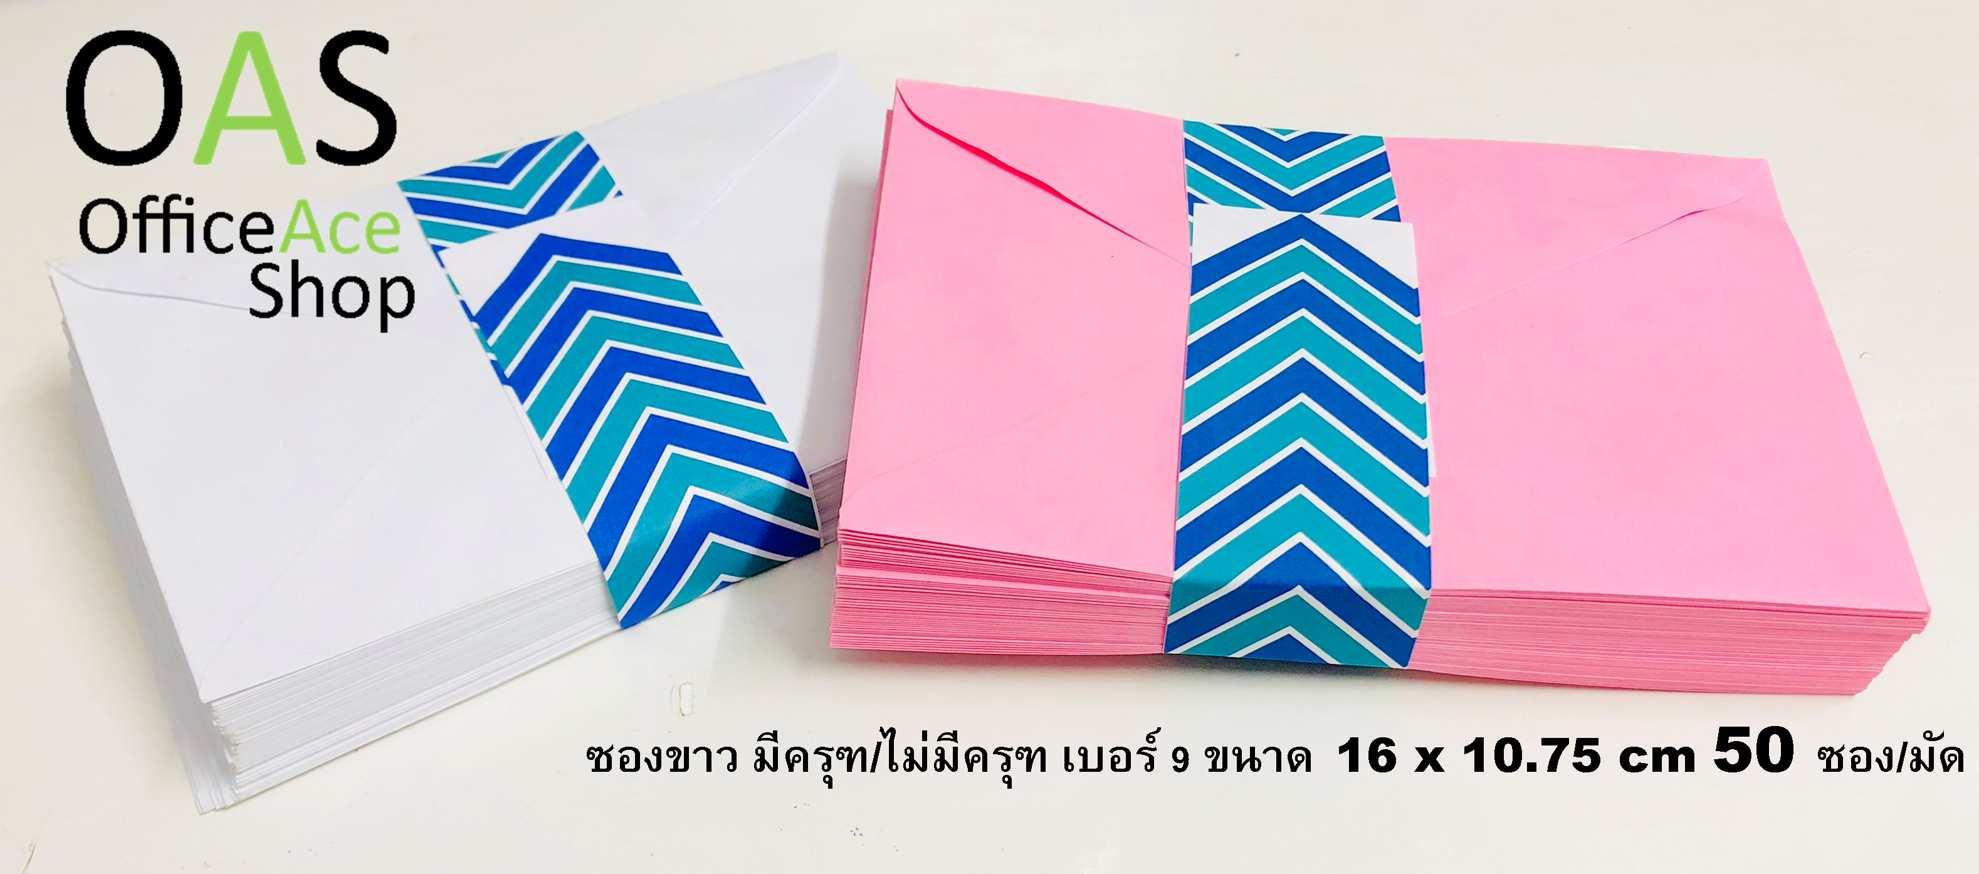 Envelope ซอง เบอร์ 7 ขนาด 16 x 10.75 cm มัดละ 50 ซอง